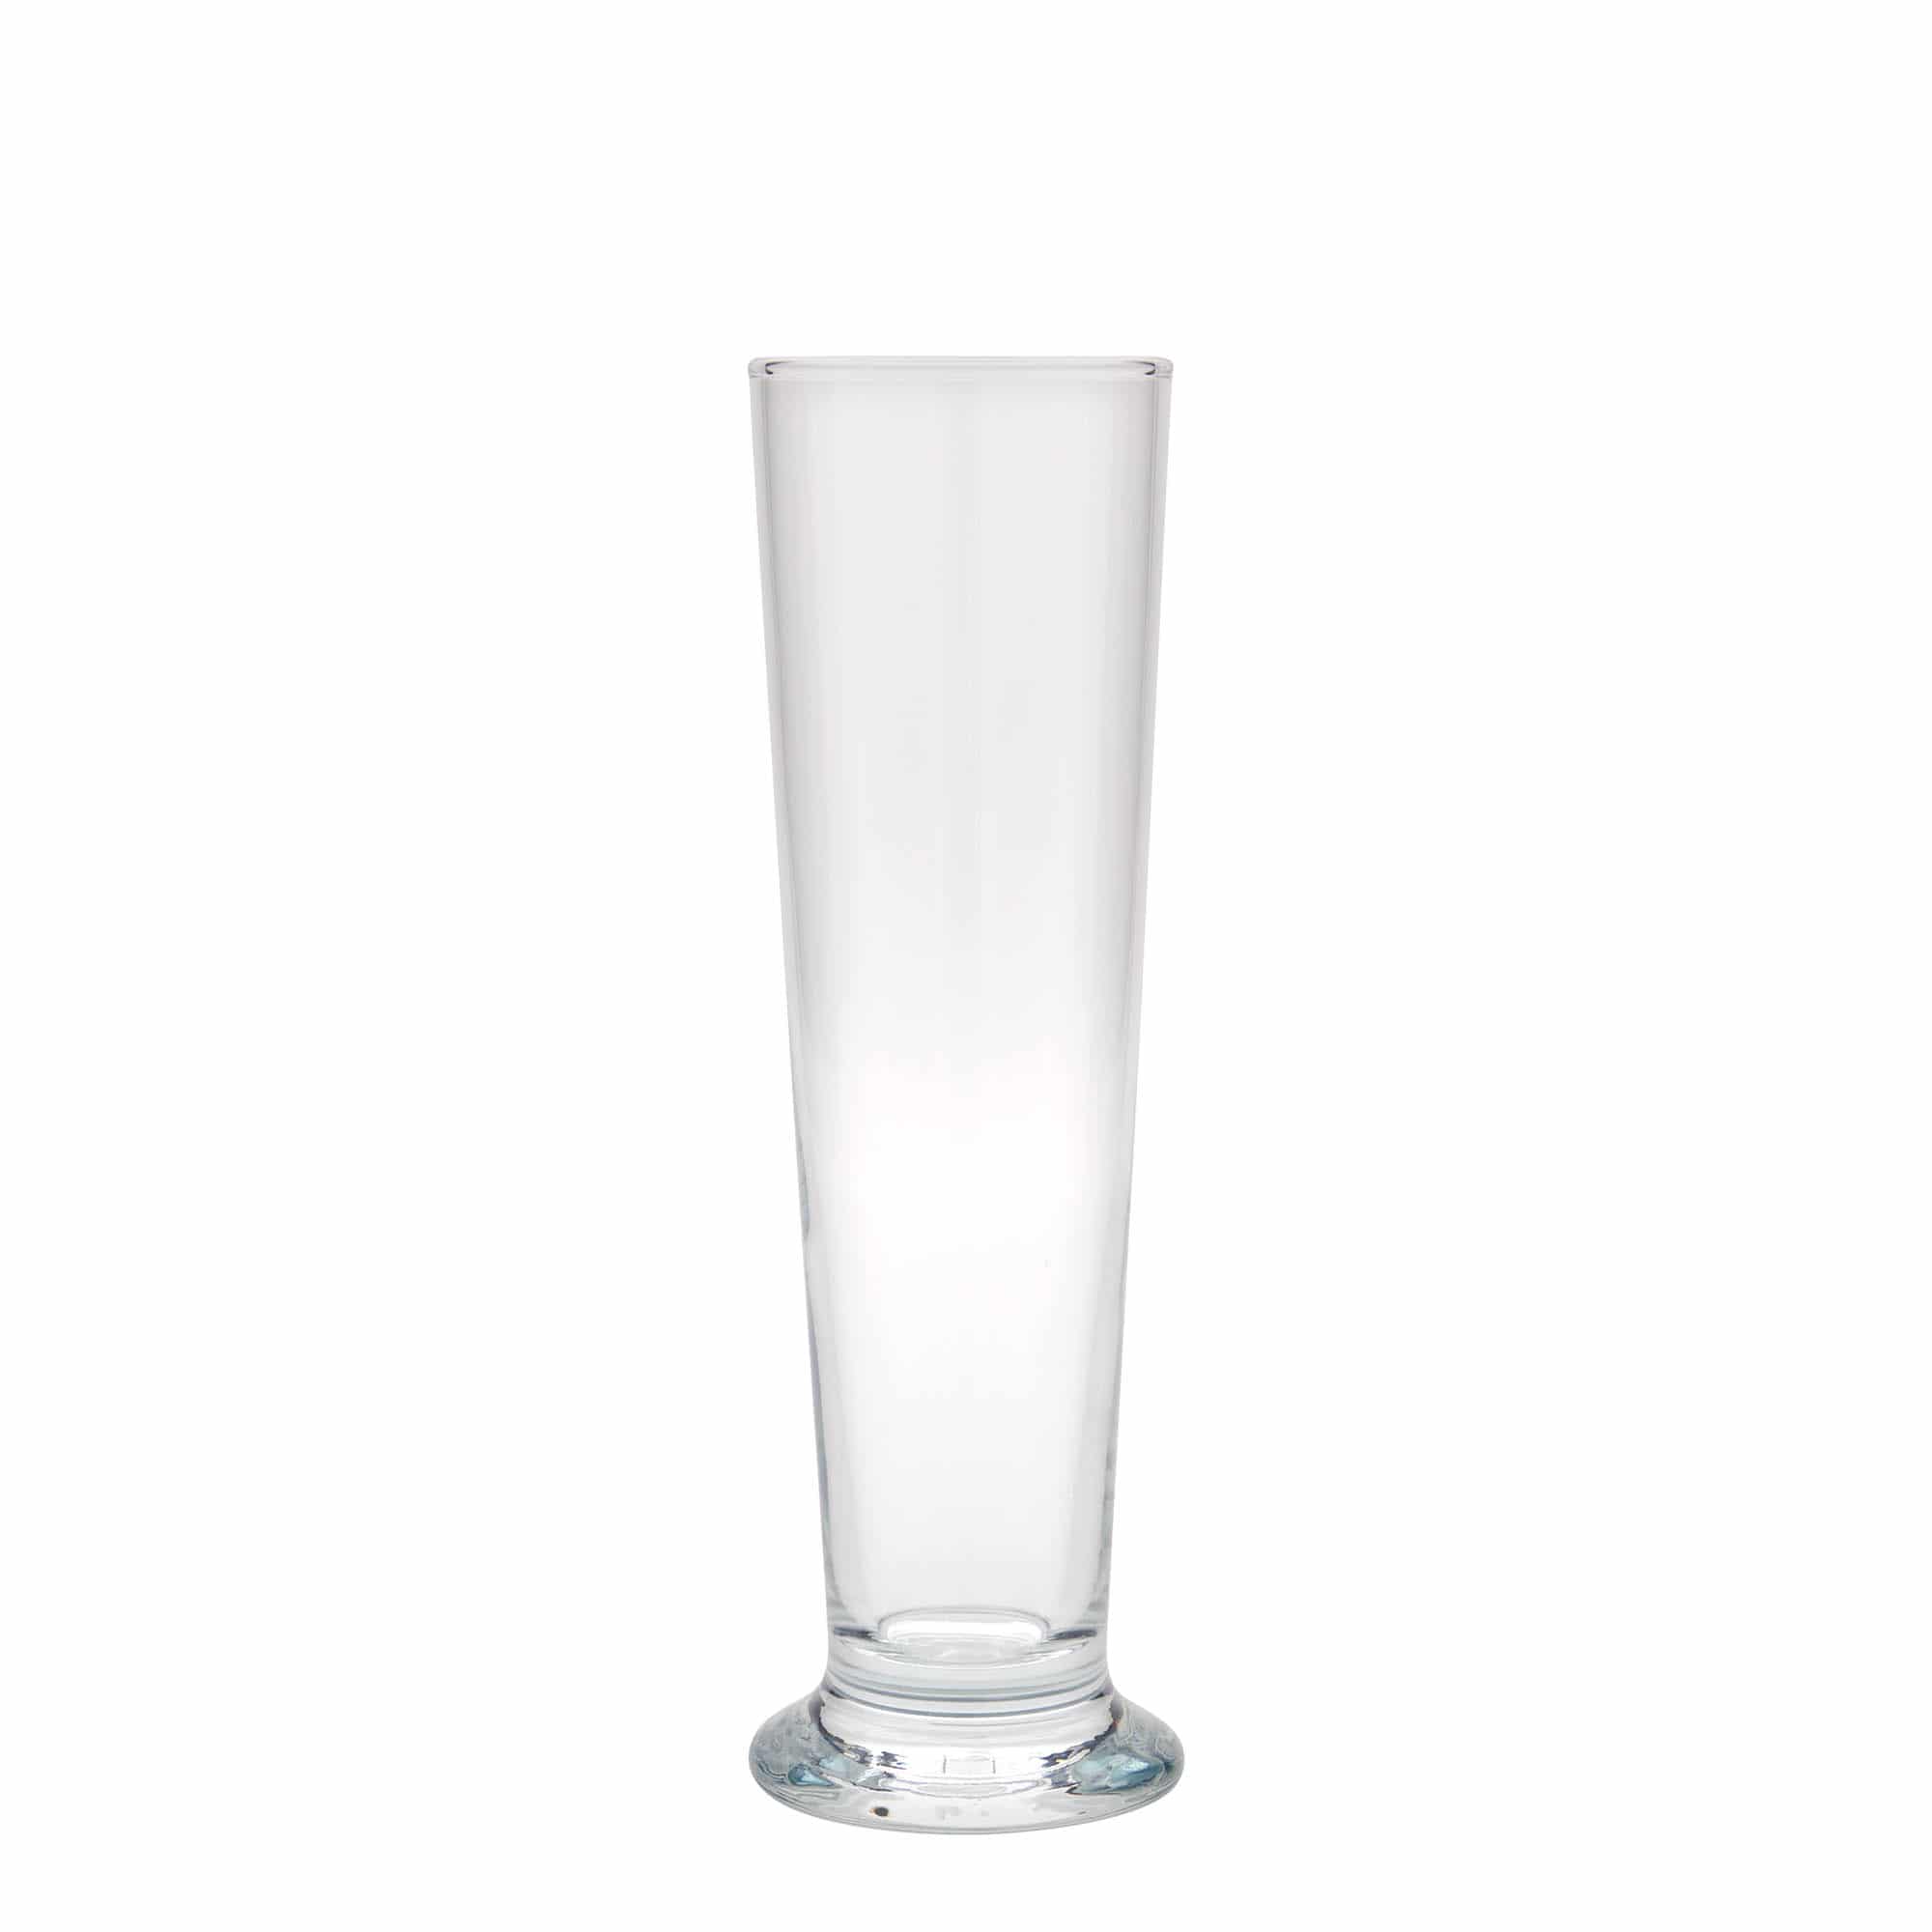 300 ml drinking glass 'Bierstange Basic', glass